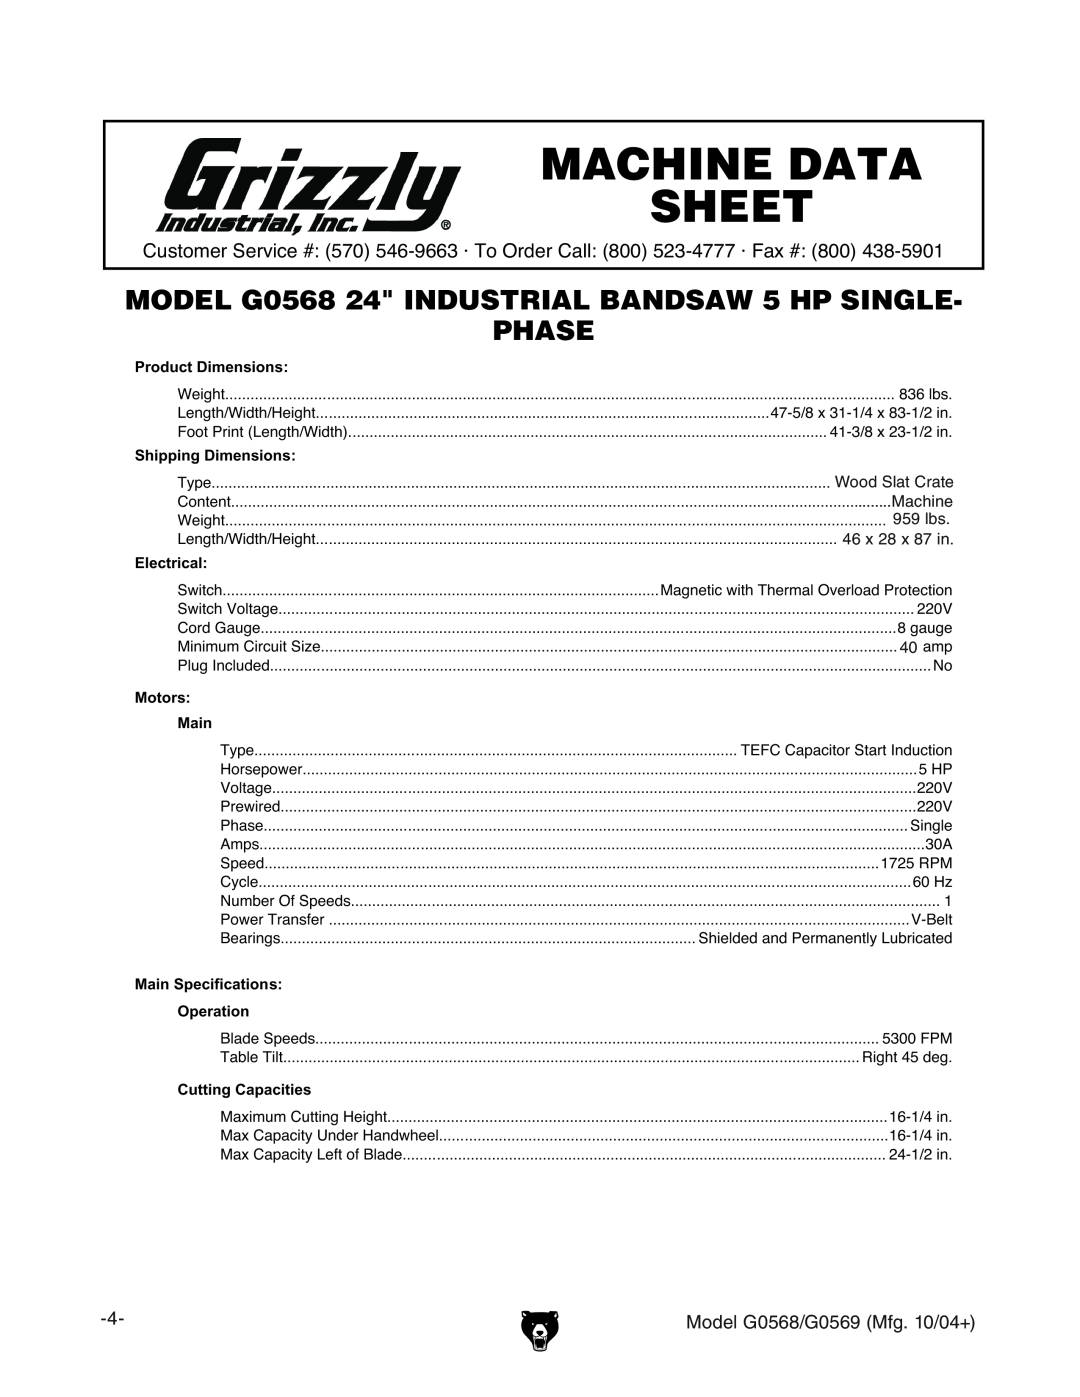 Grizzly G0569 Machine Data Sheet, MODEL G0568 24 INDUSTRIAL BANDSAW 5 HP SINGLE PHASE, EgdYjXi9bZchdch, Heec\9bZchdch 